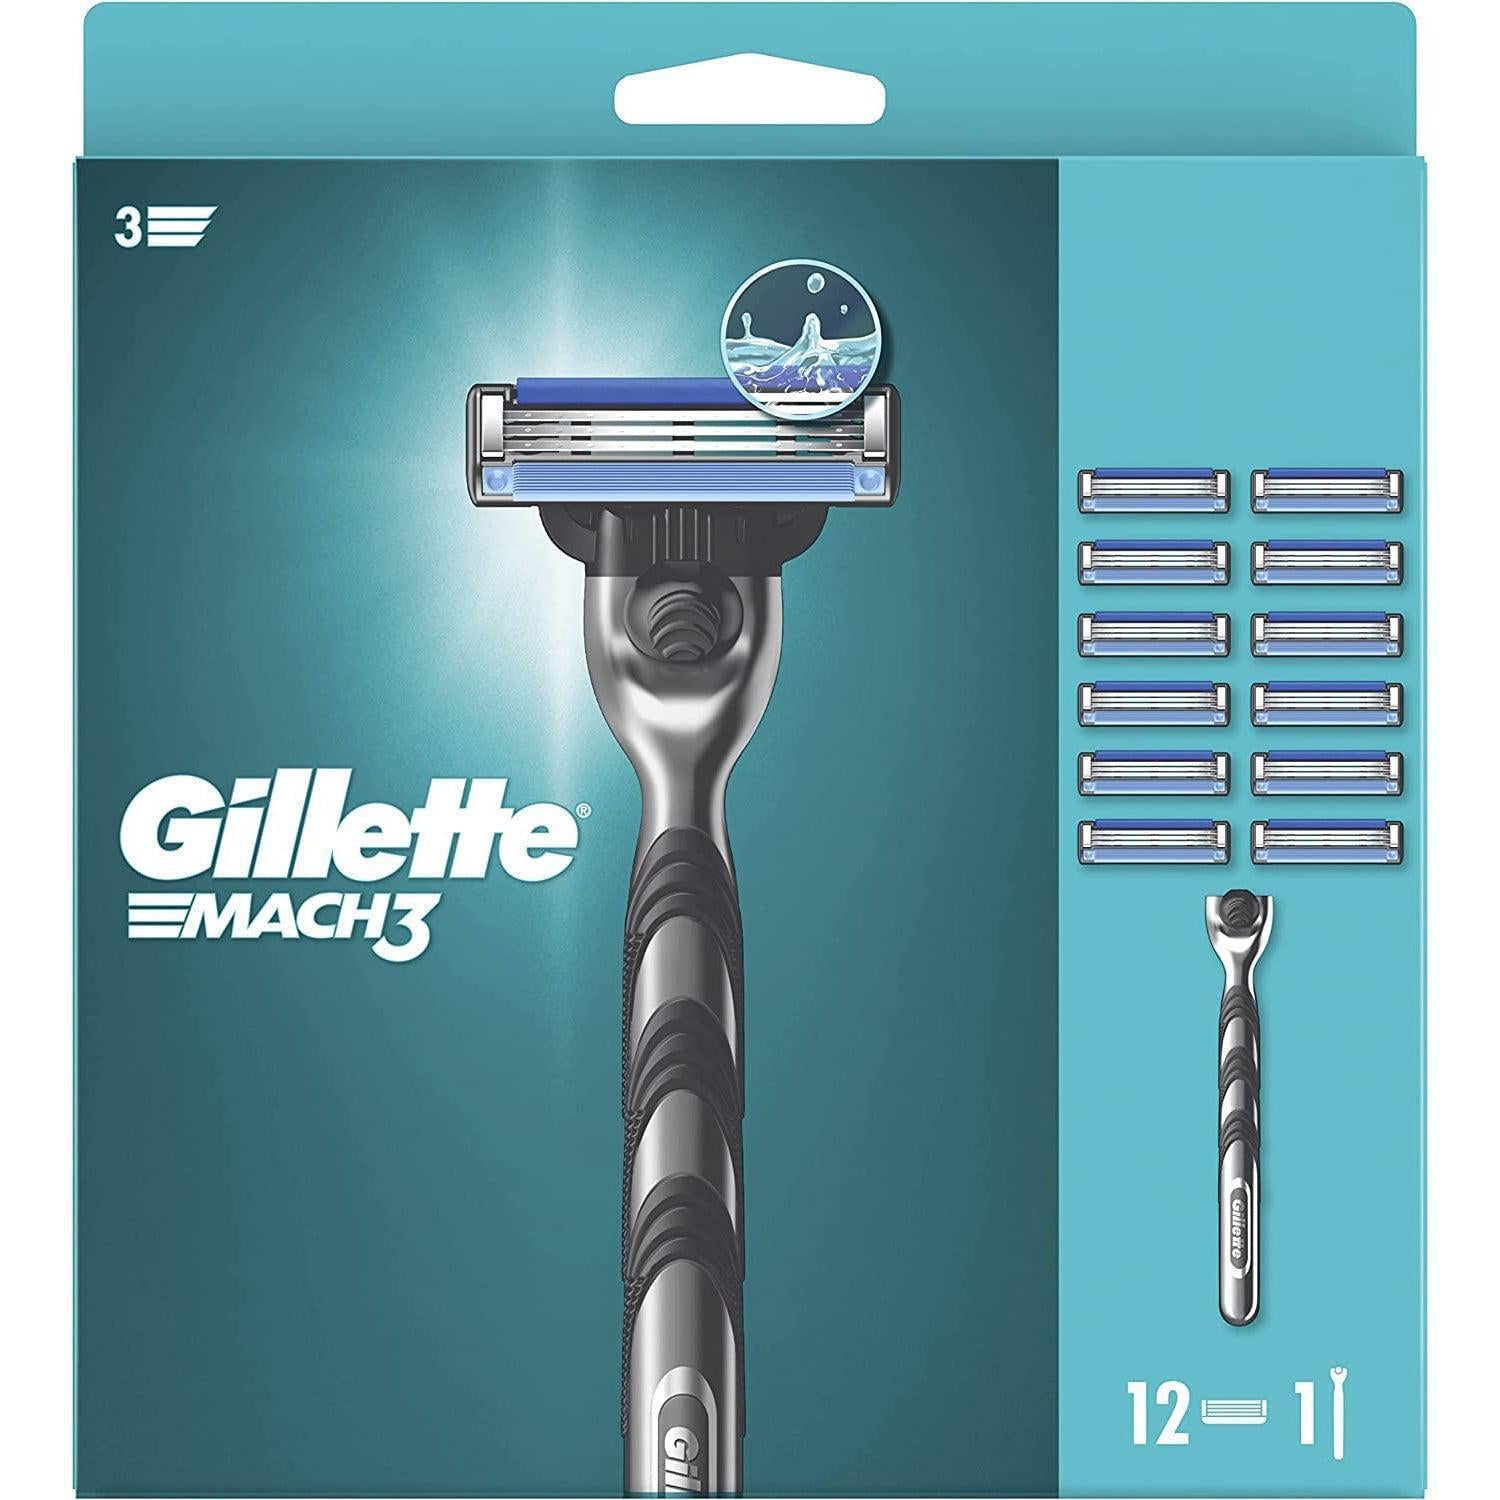 Gillette Mach3 Razor Big Blade Pack - Stronger-Than-Steel Blades - 12 Refills - Healthxpress.ie